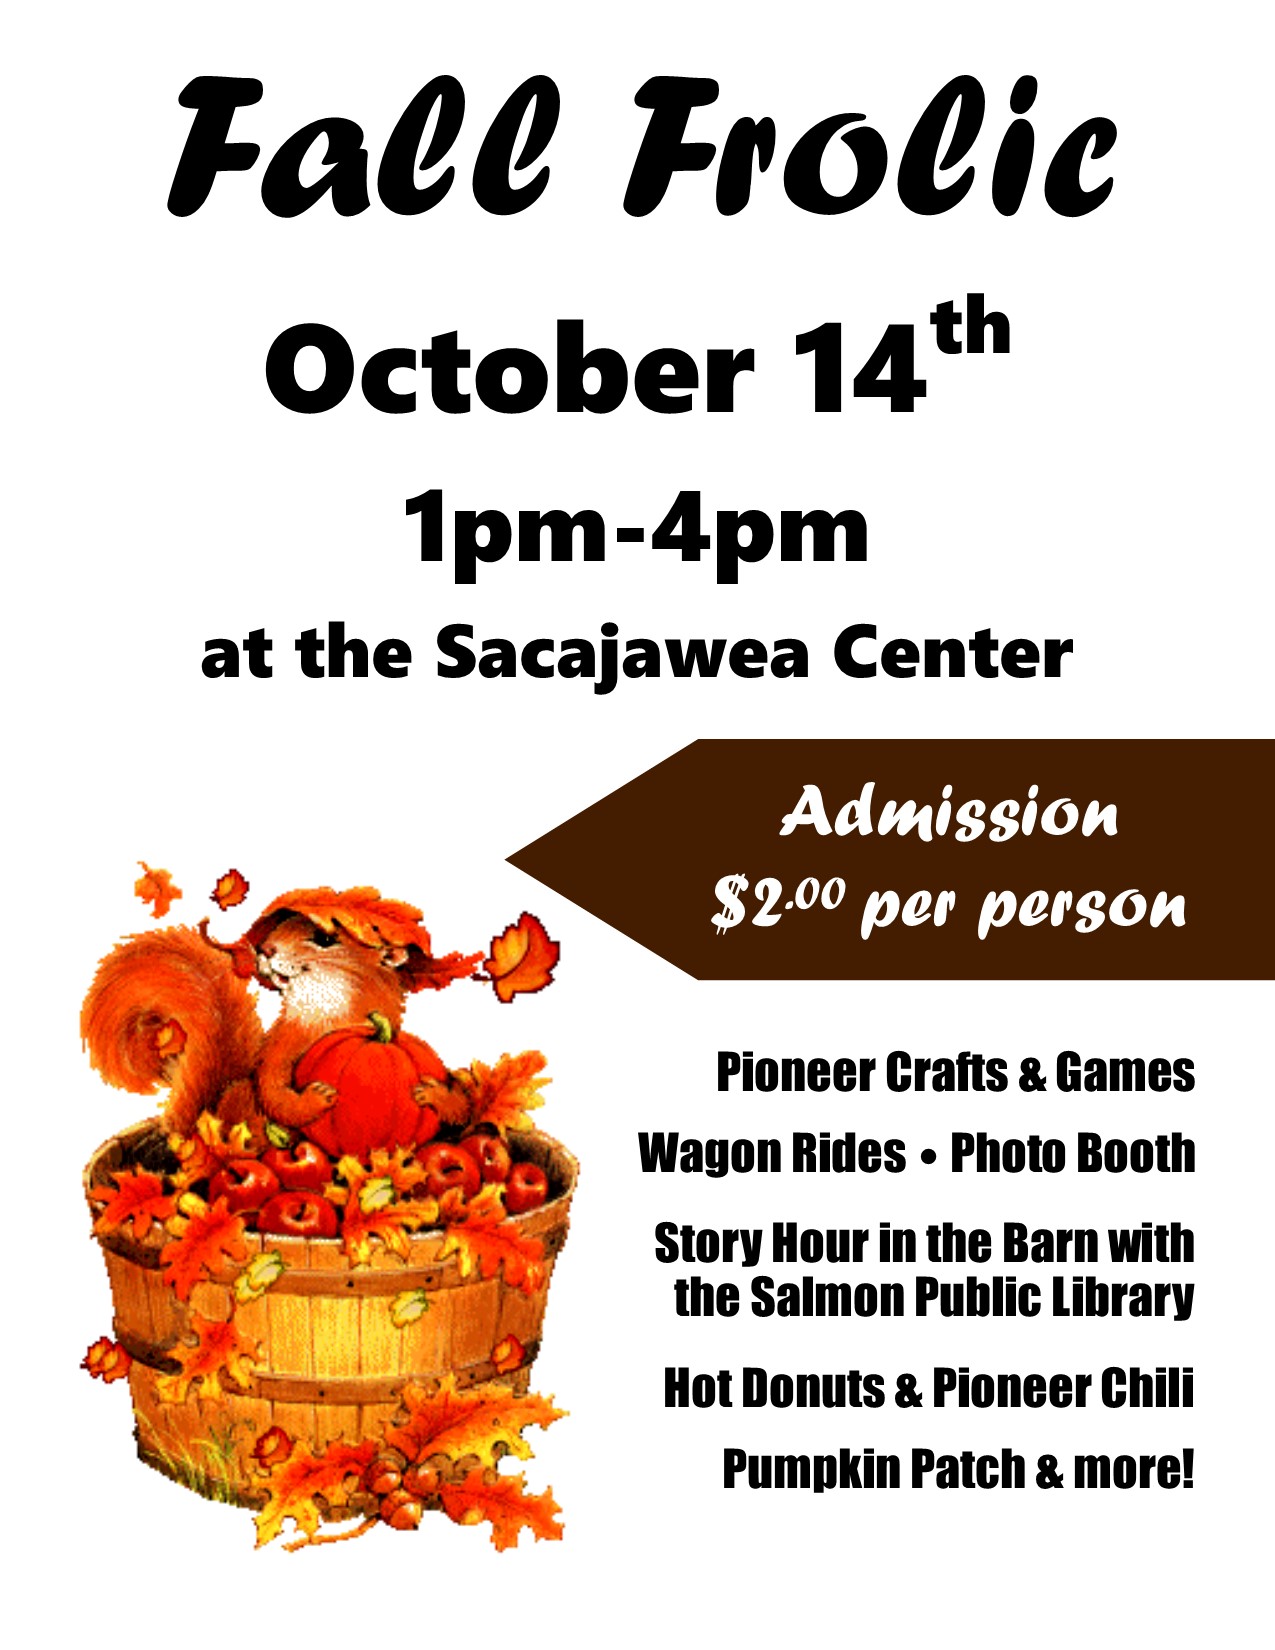 Fall Frolic! October 14th Sacajawea Center